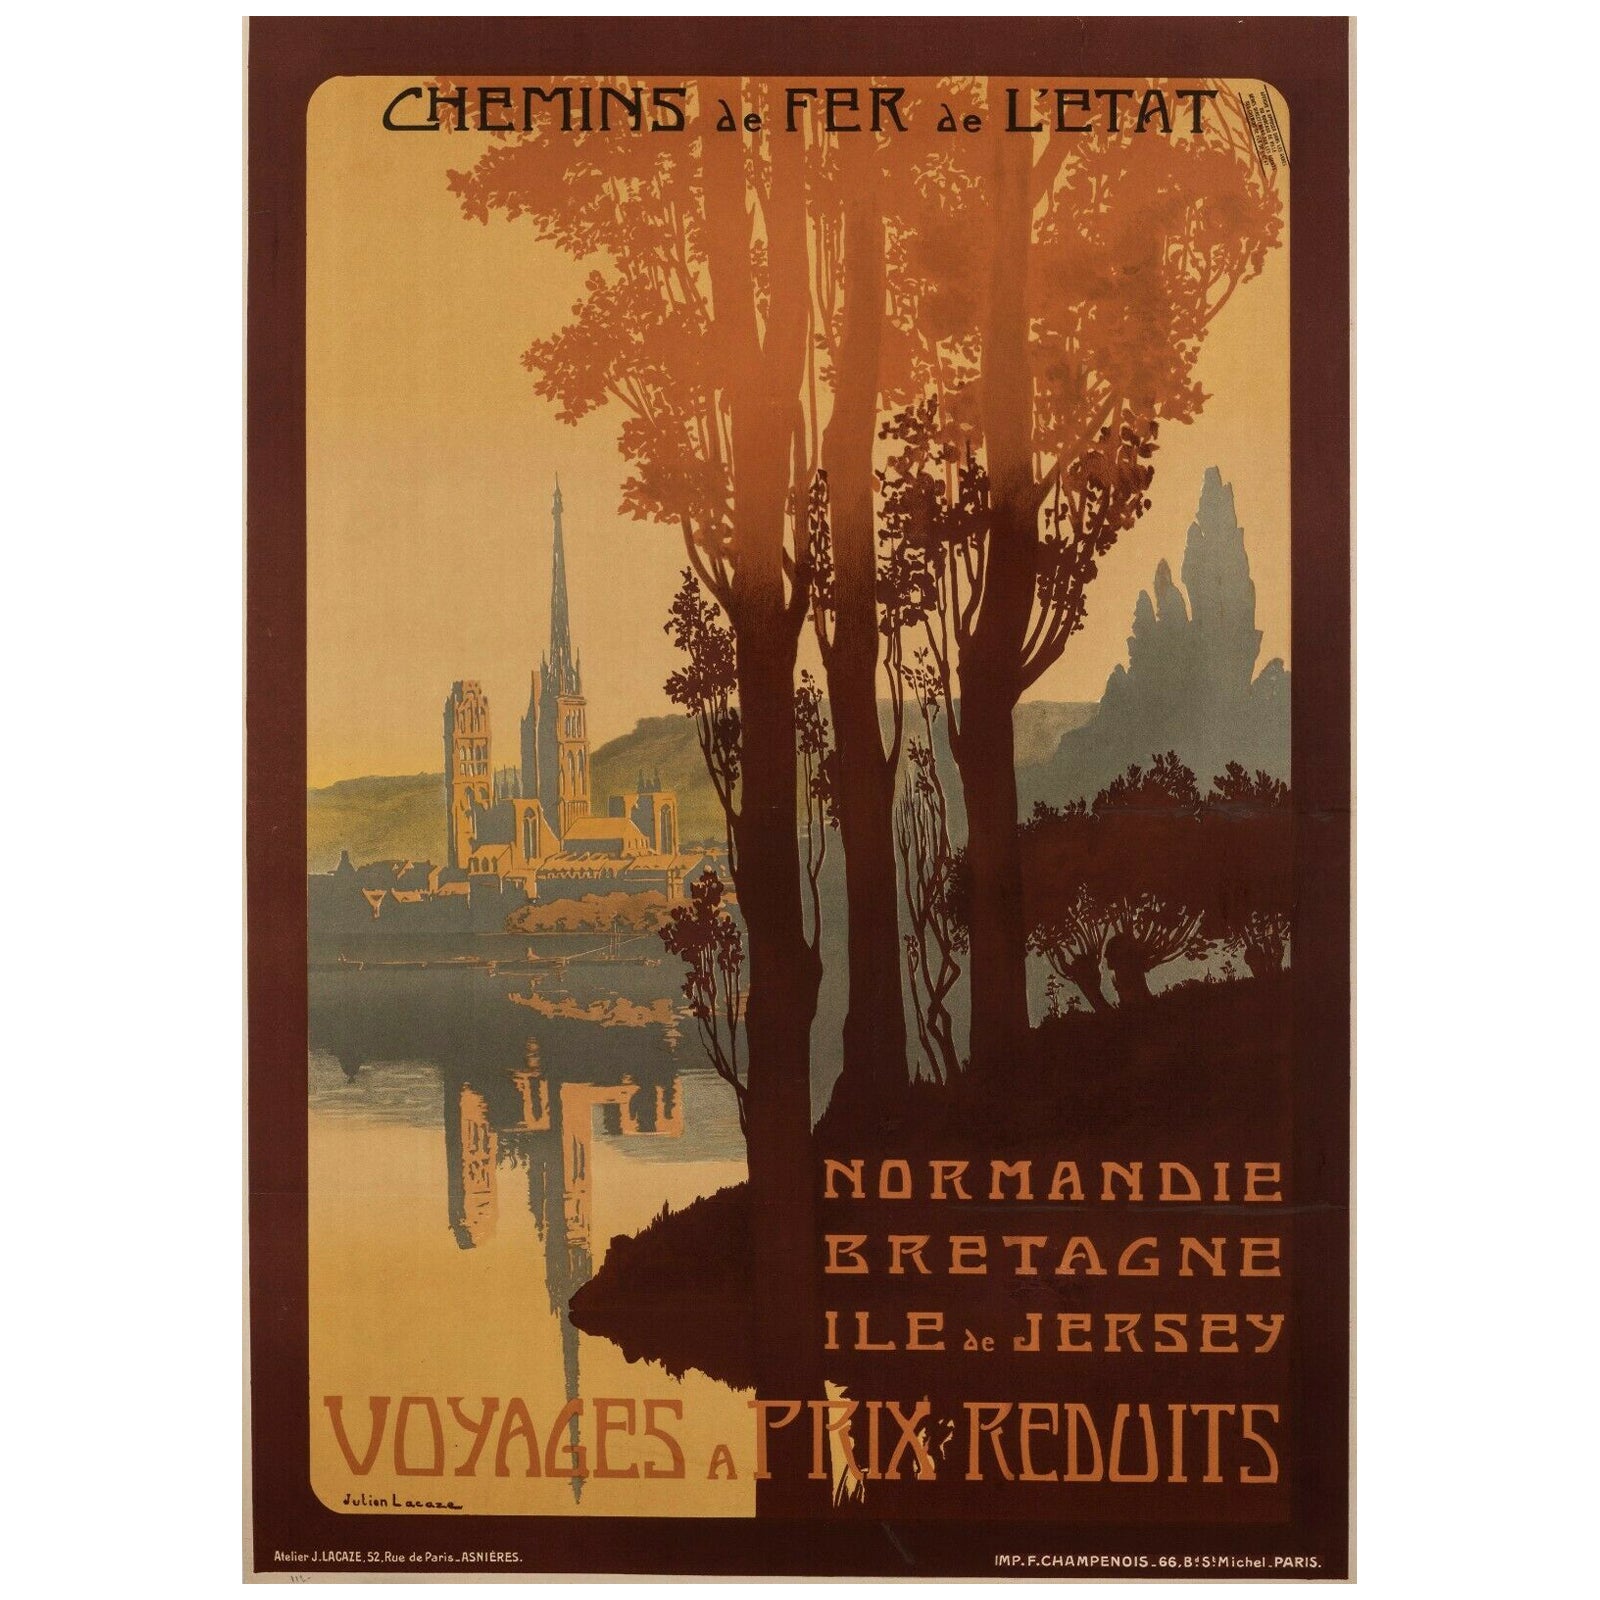 Original Vintage Travel Poster-J. Lacaze-Normandie-Bretagne-Jersey, c.1910